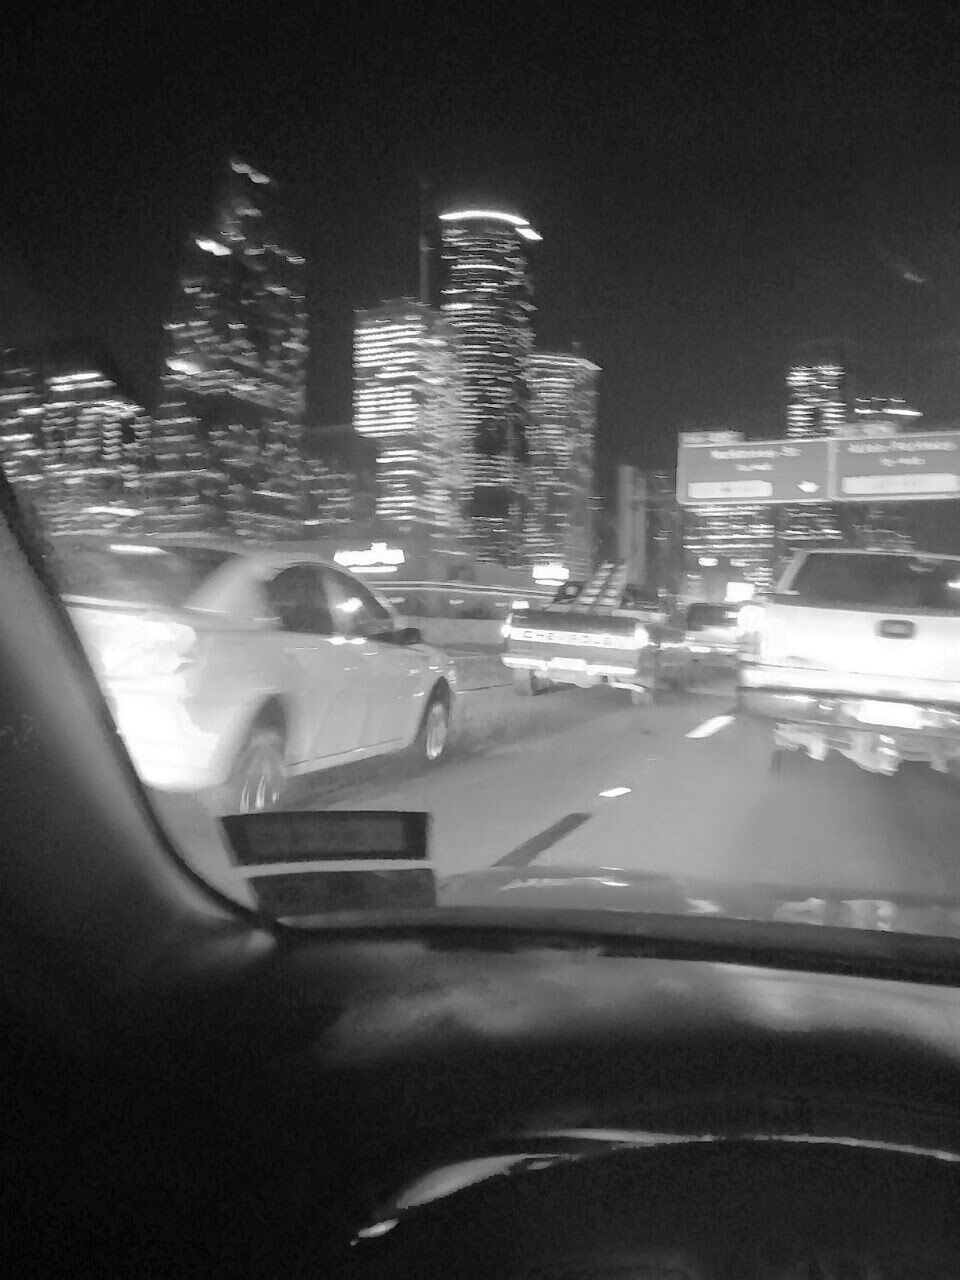 Cars on street seen through windshield at night